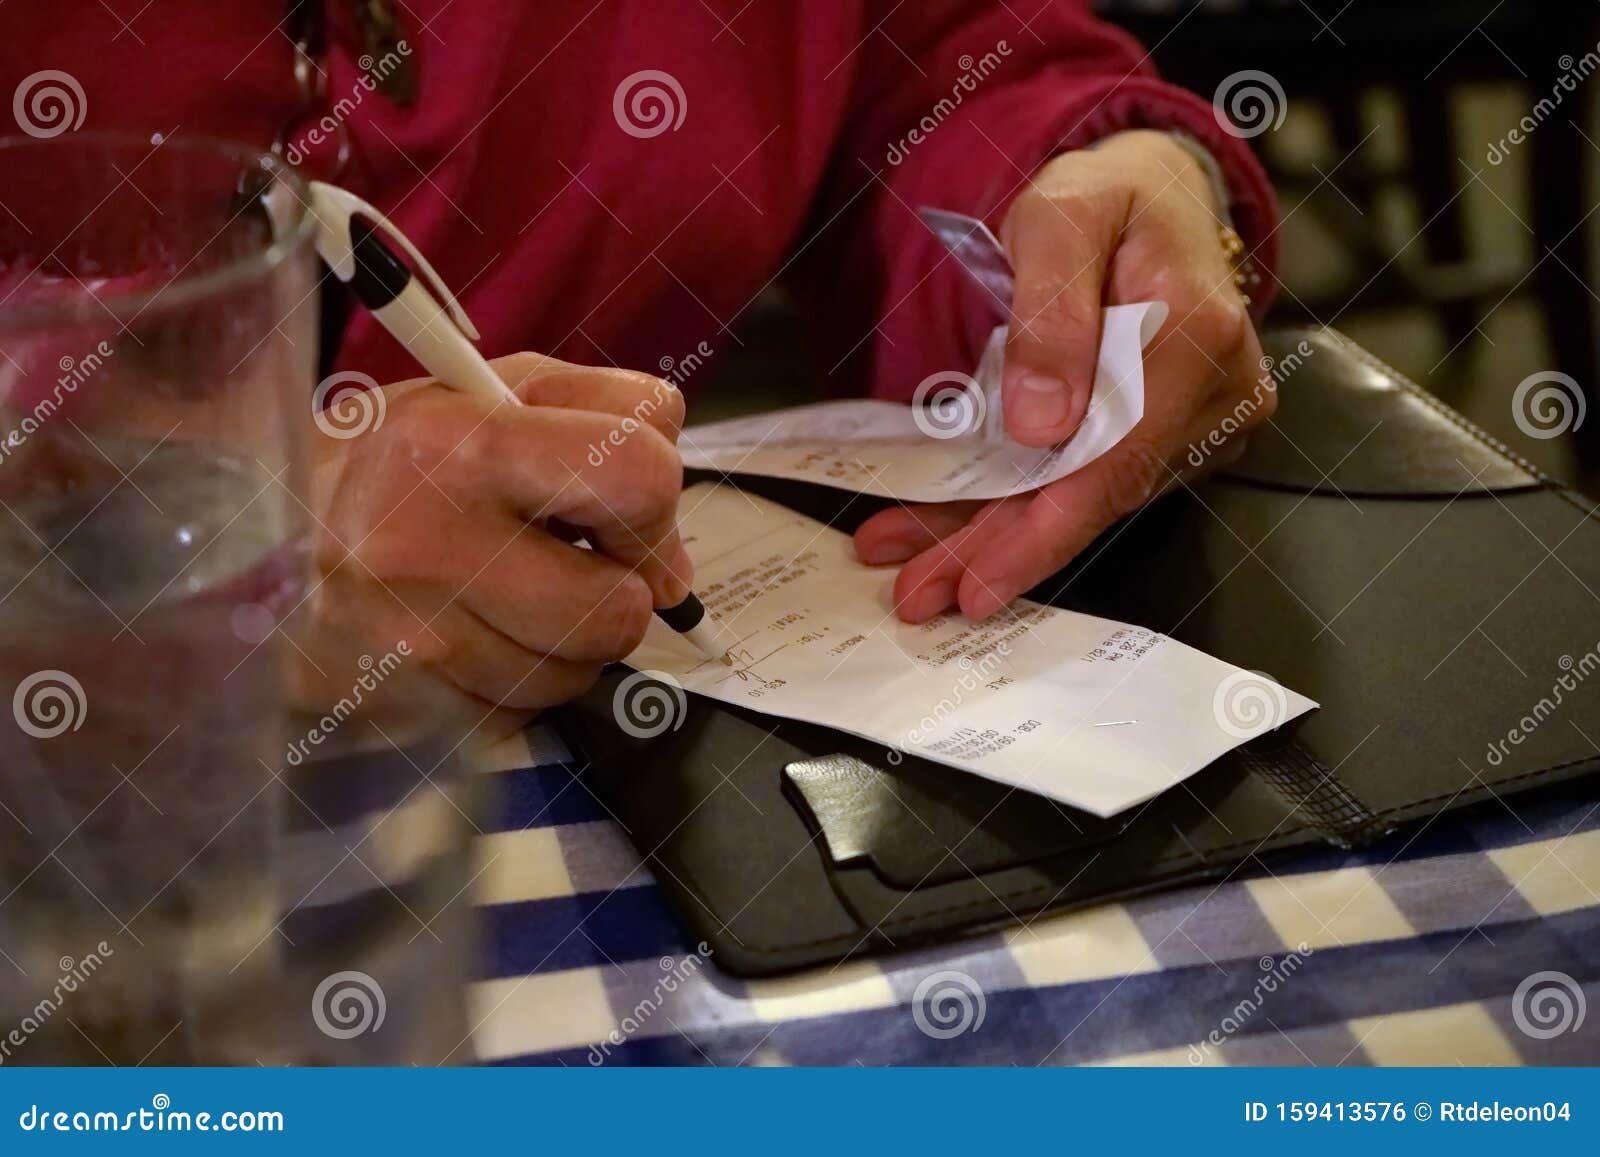 hands calculating tip on restaurant receipt